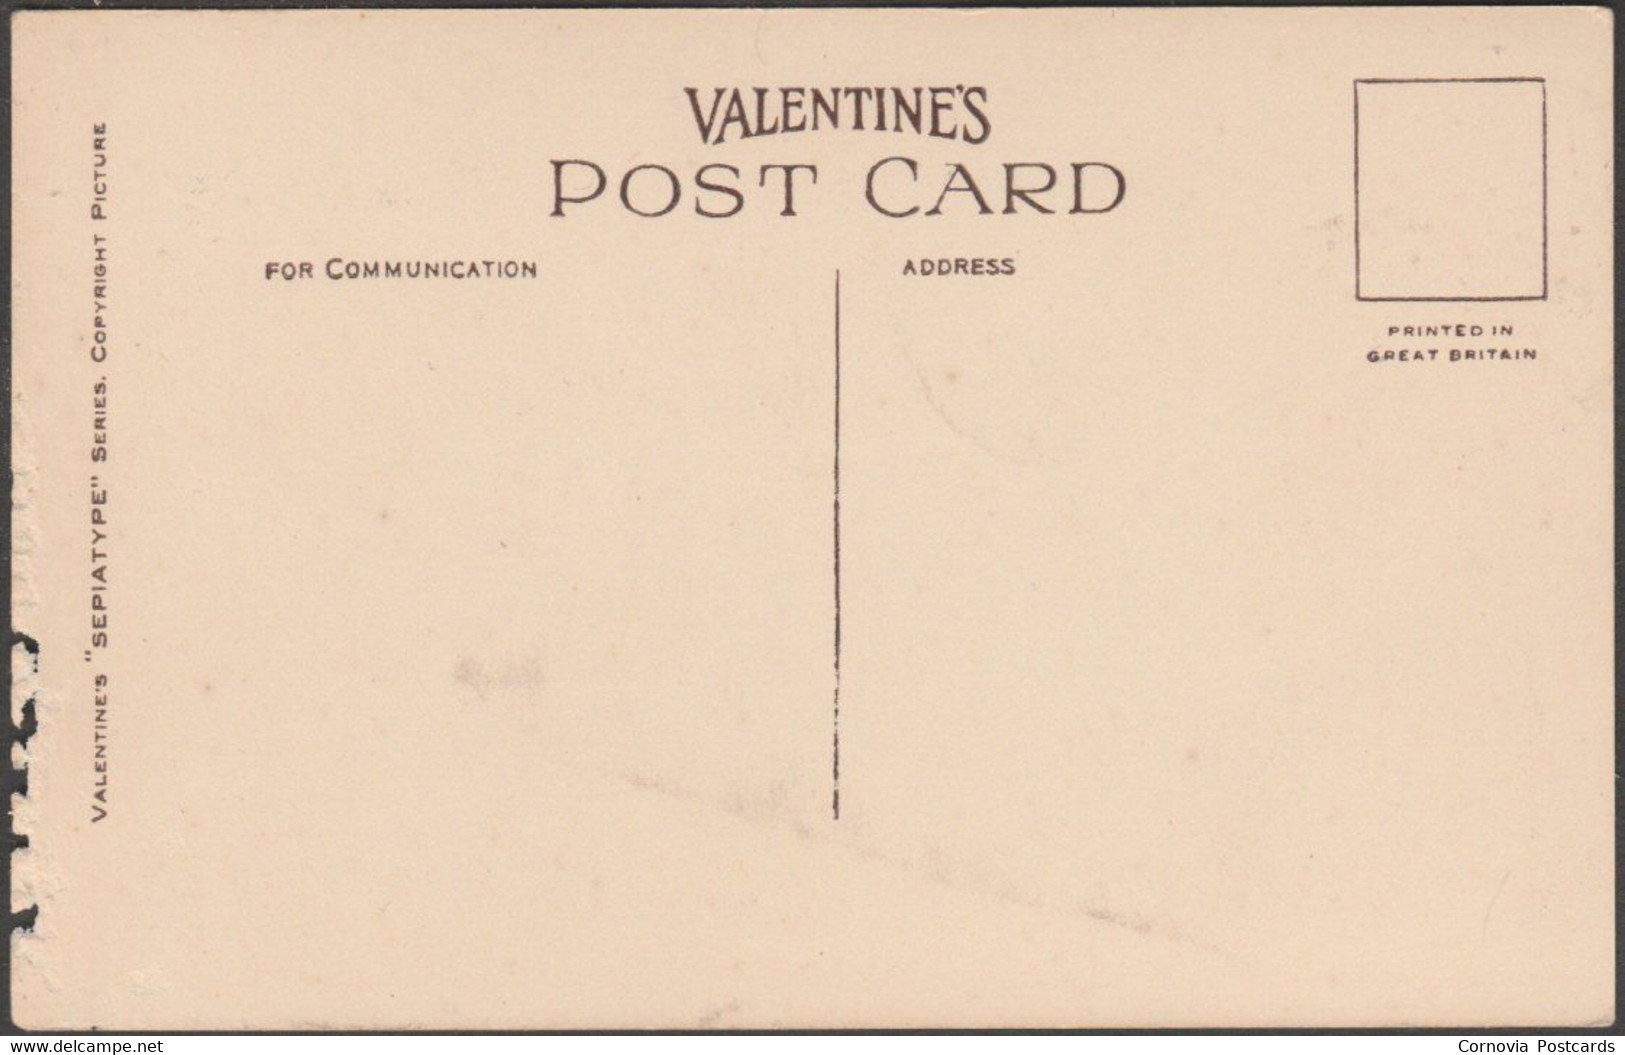 The Dam, Lake Vrynwy, Montgomeryshire, C.1930 - Valentine's Postcard - Montgomeryshire